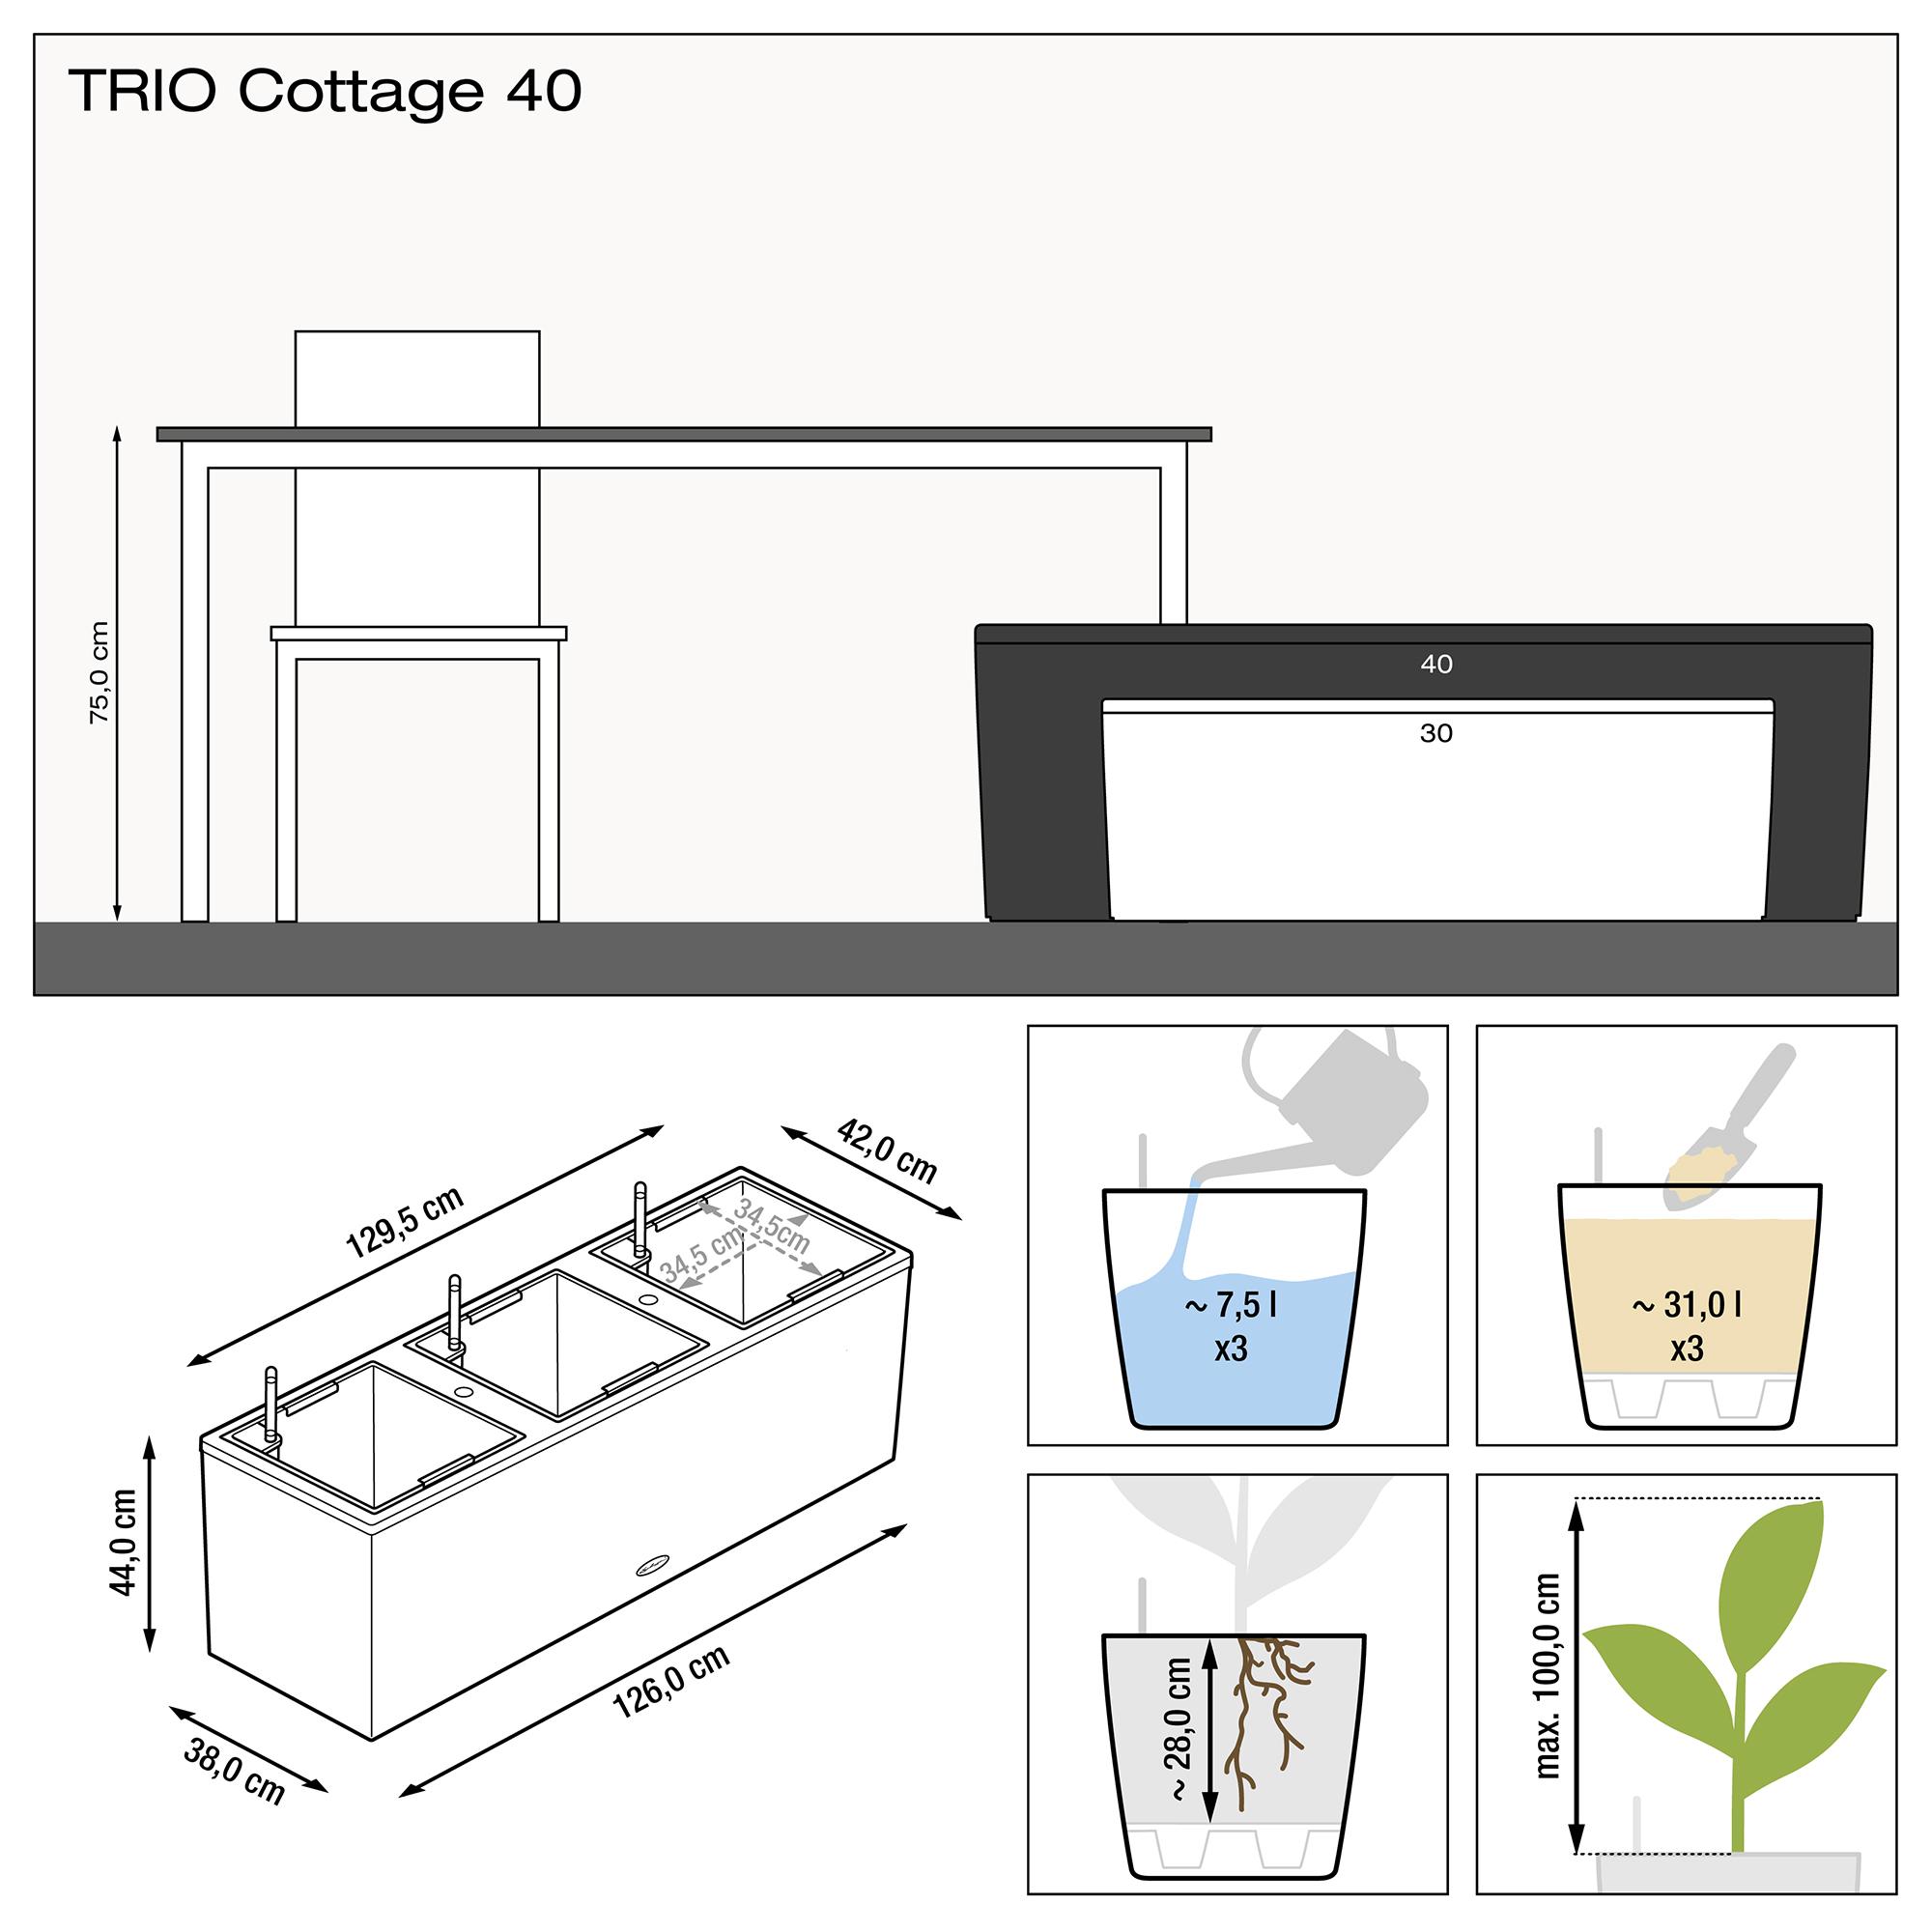 le_trio-cottage40_product_addi_nz Thumb